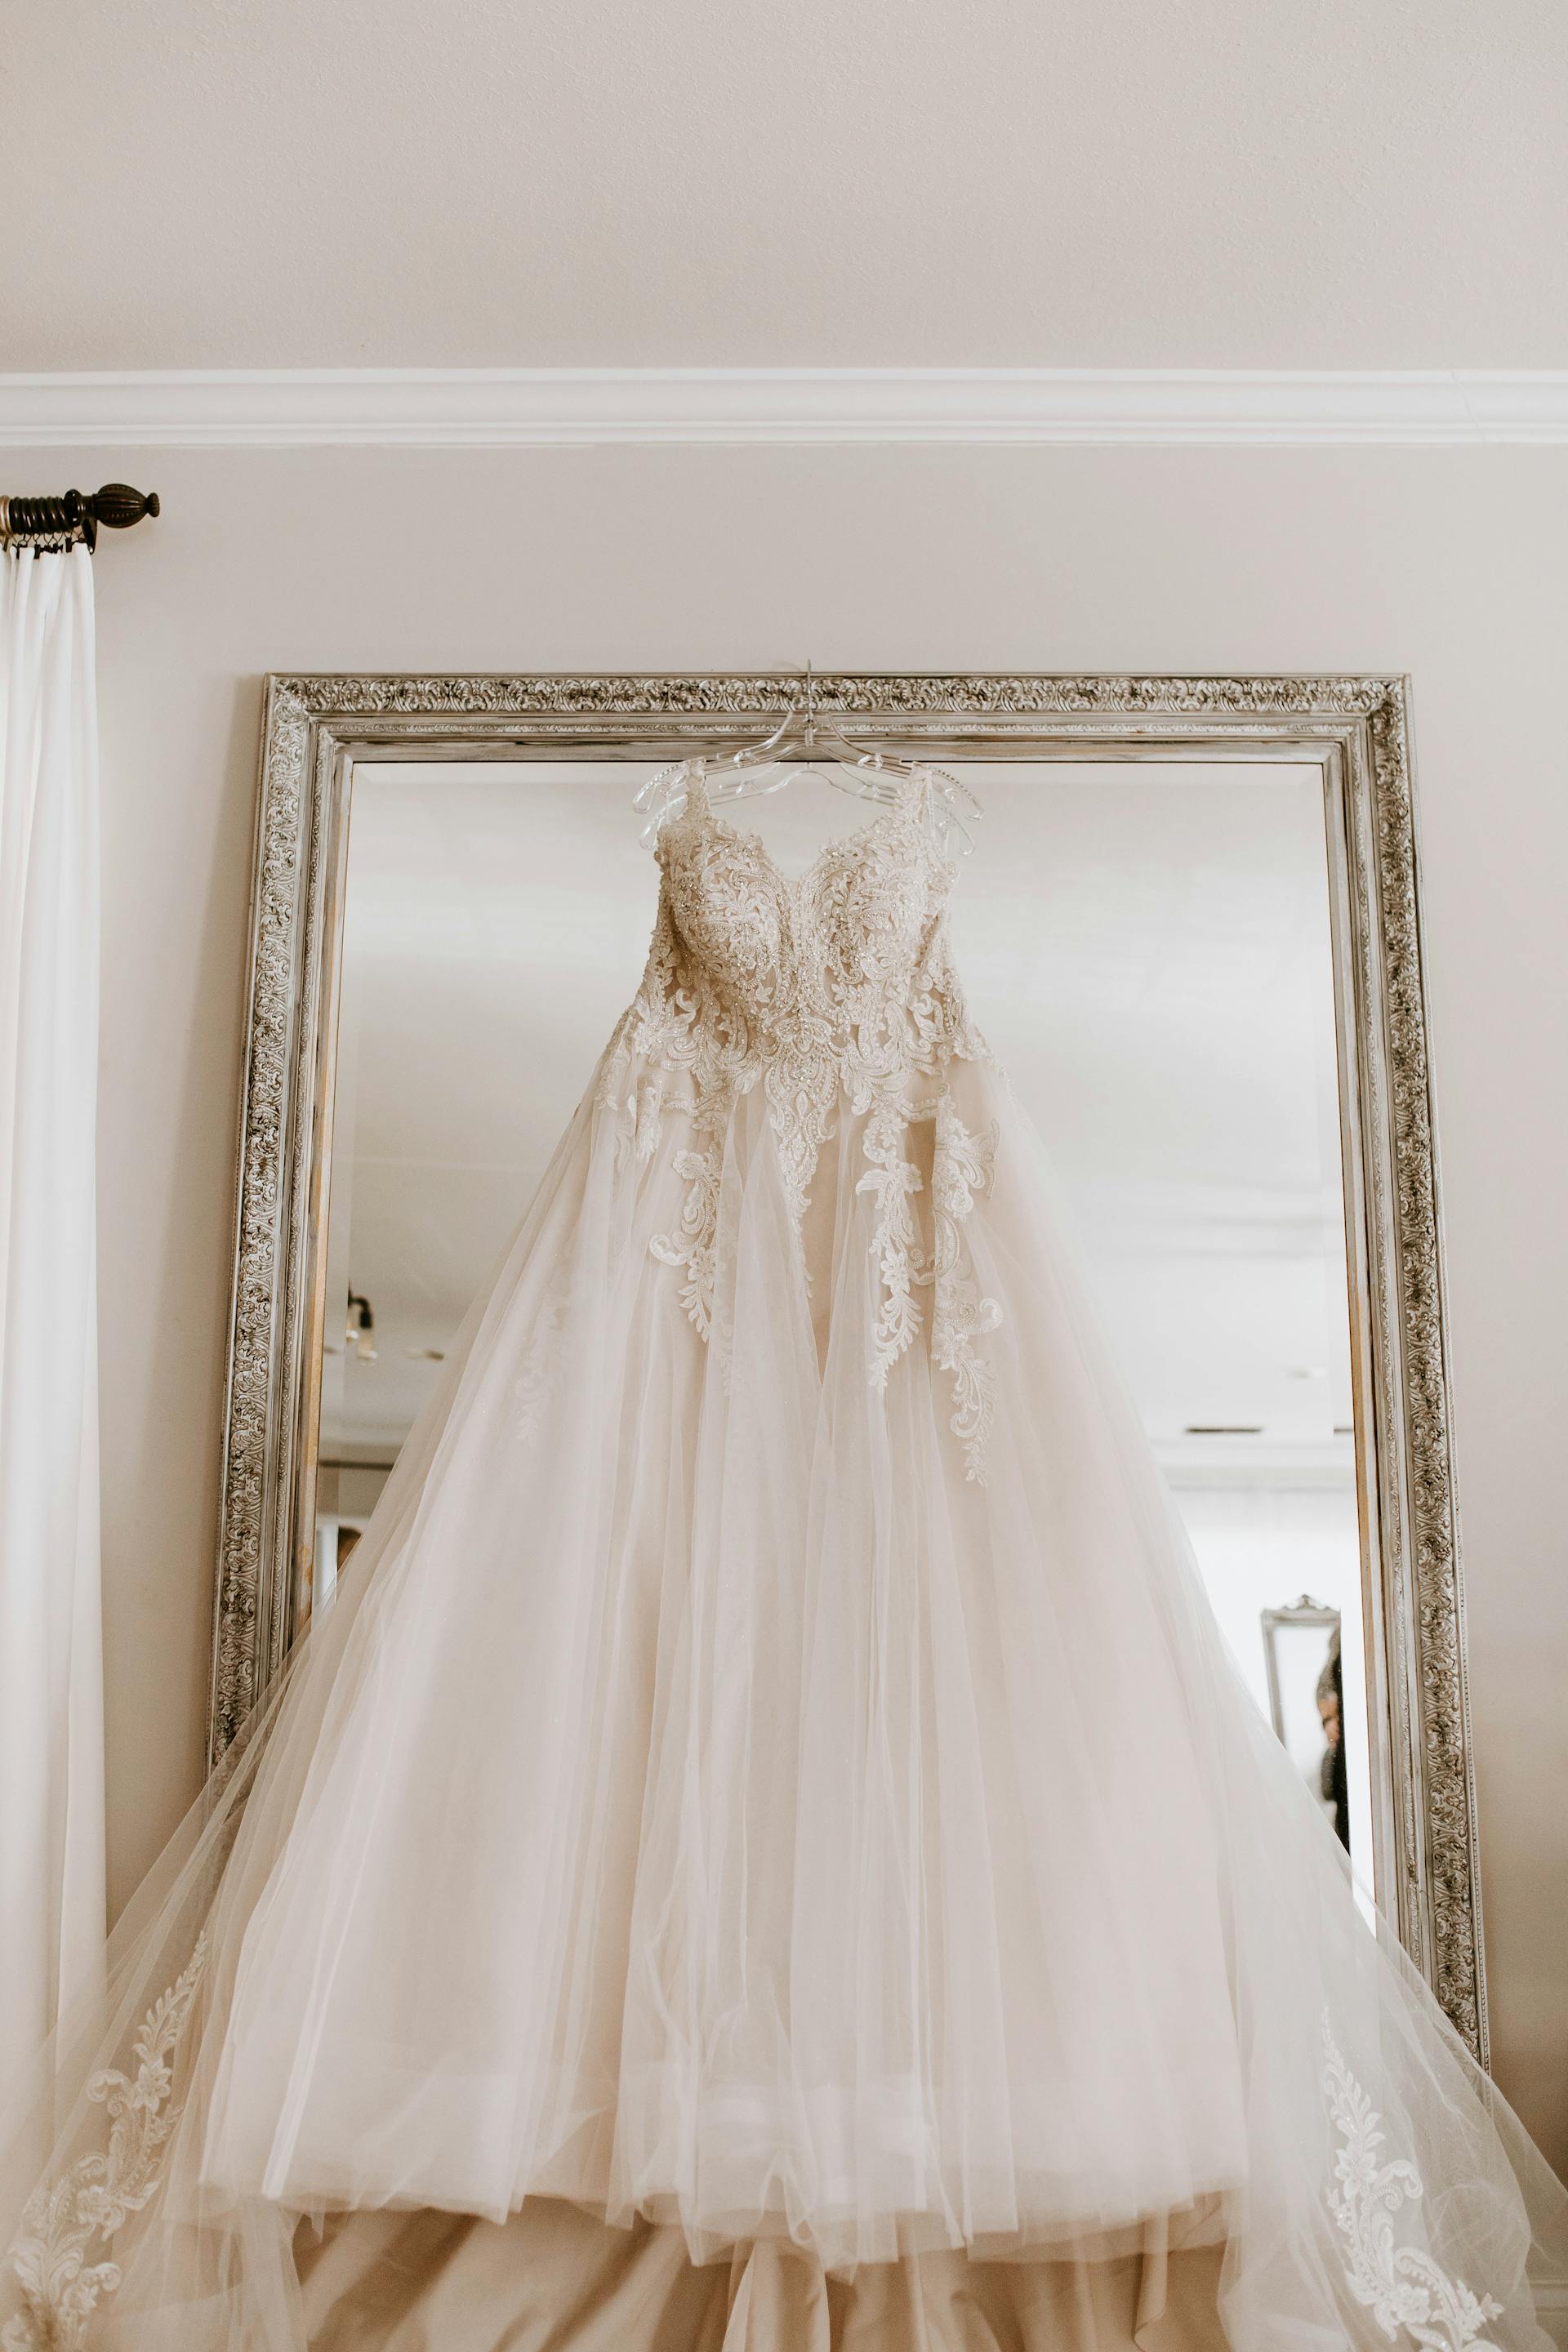 A hanging wedding dress | Source: Pexels